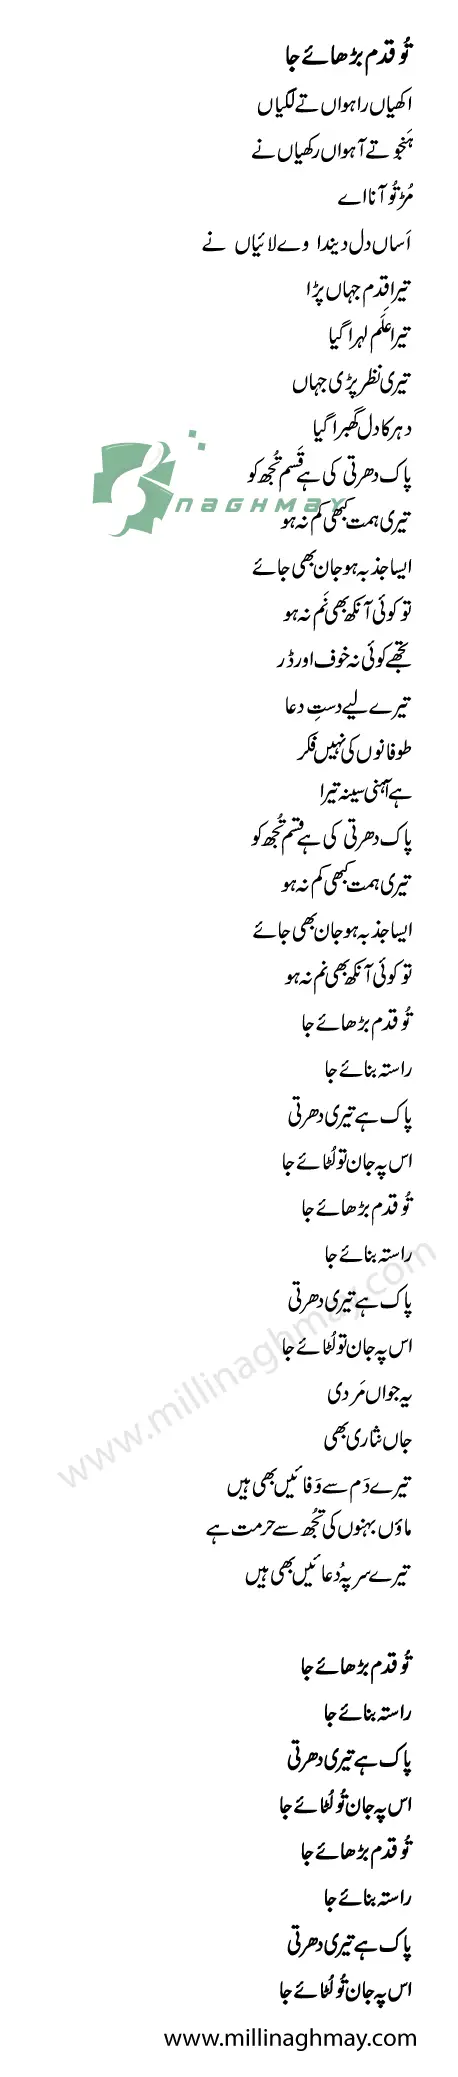 Tu Qadam Barhae Ja Lyrics Urdu